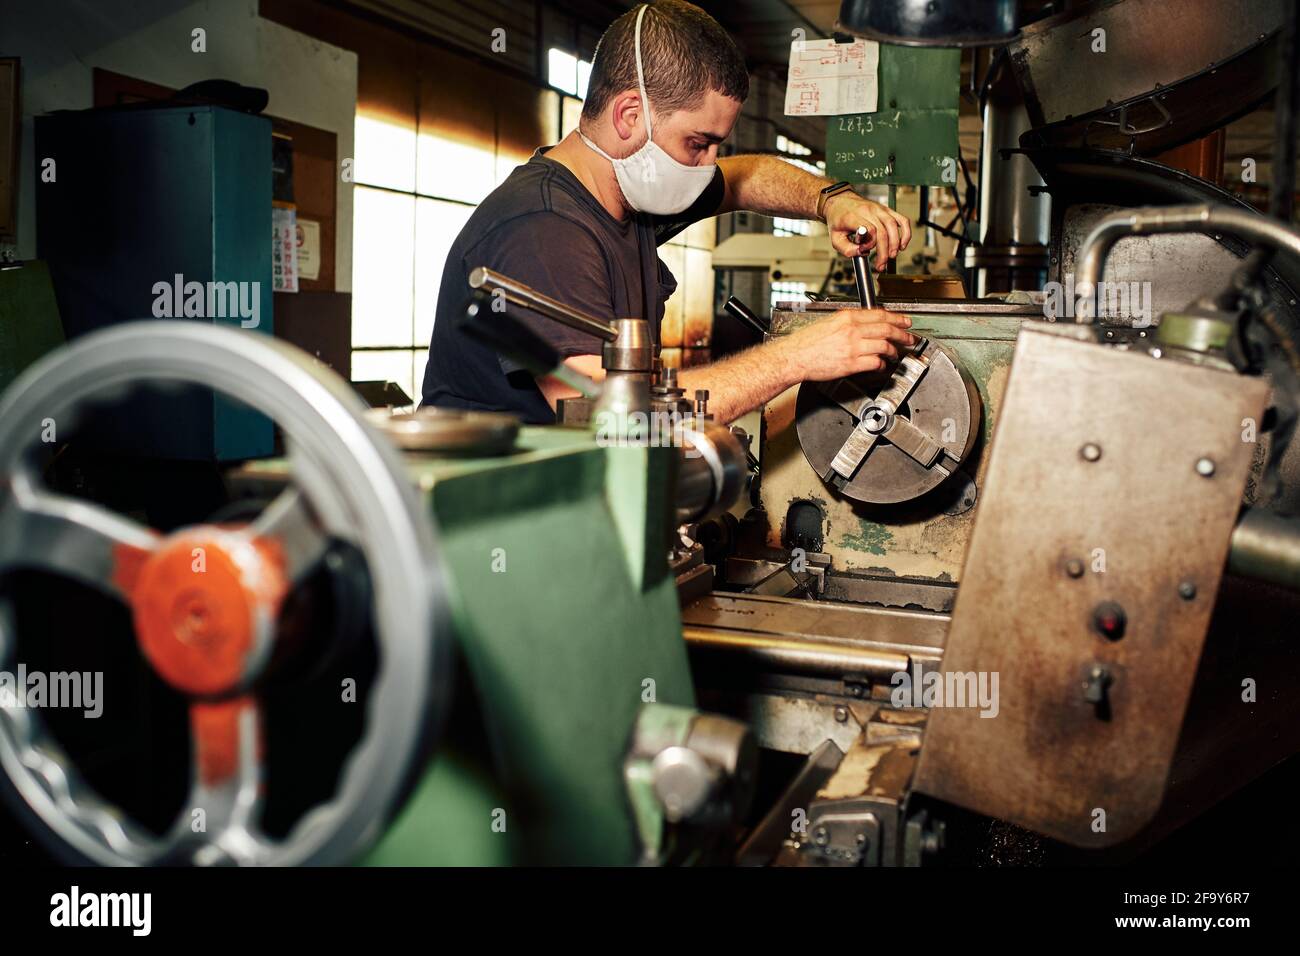 Closeup shot of a Hispanic mechanical engineer controlling the lathe machine in a factory Stock Photo